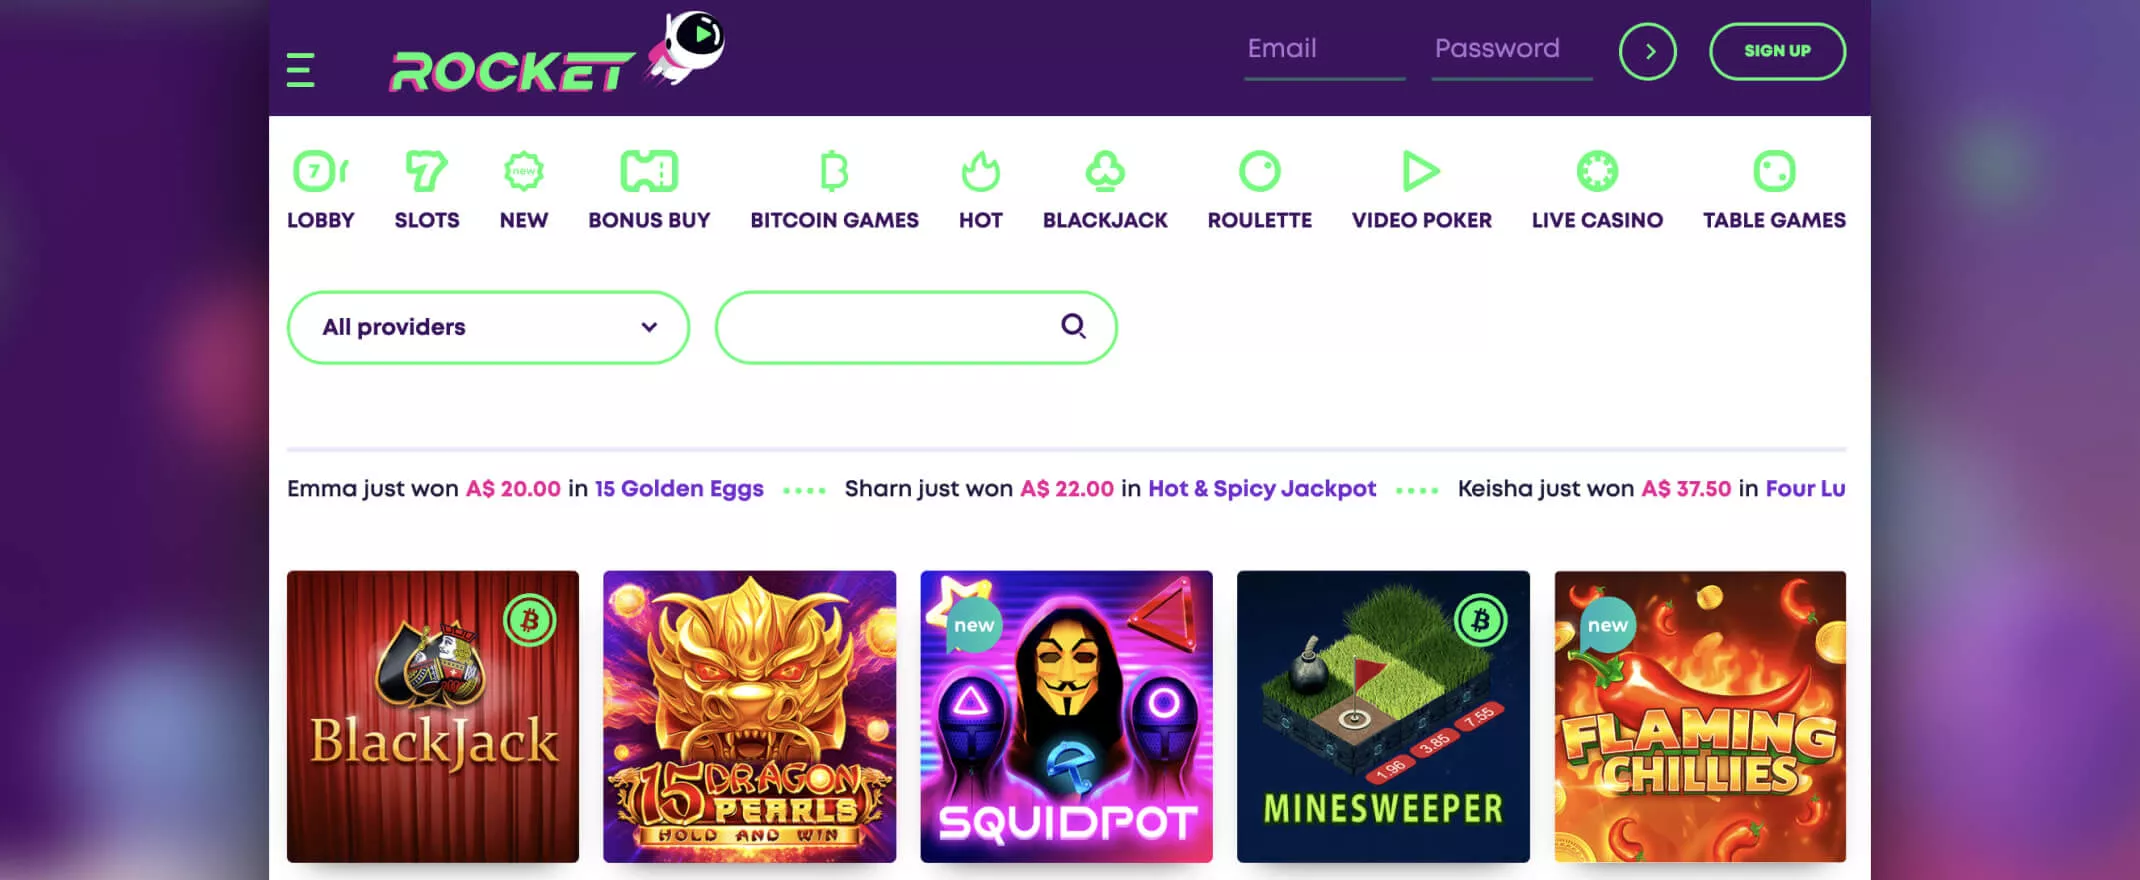 Casino Rocket screenshot of games